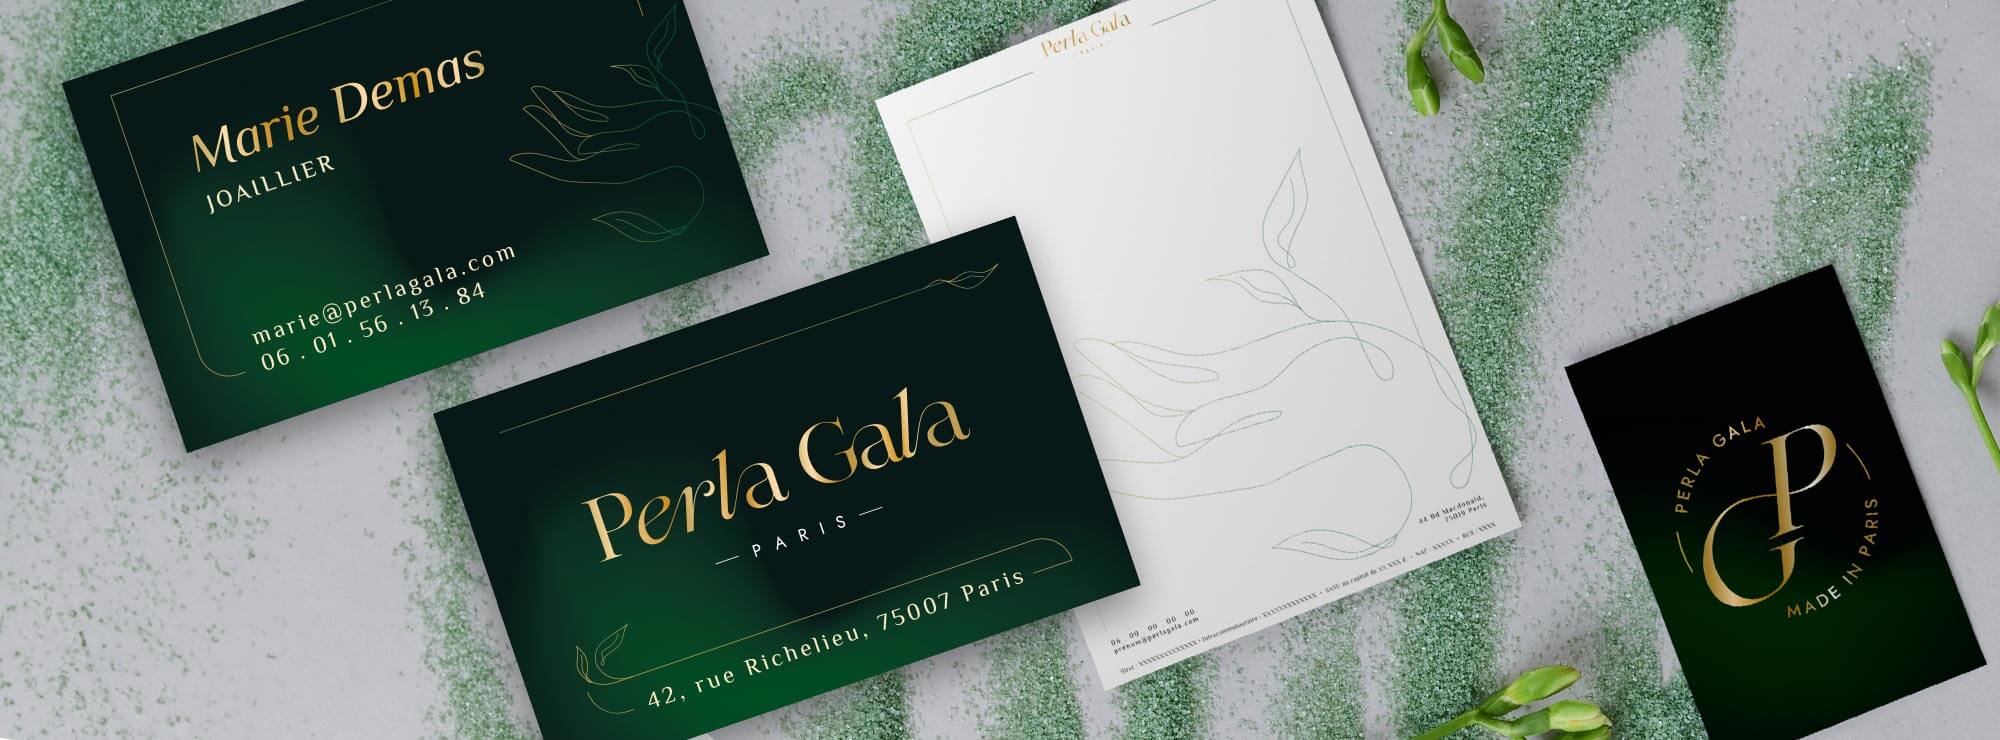 Perla Gala - a little jewel of a brand